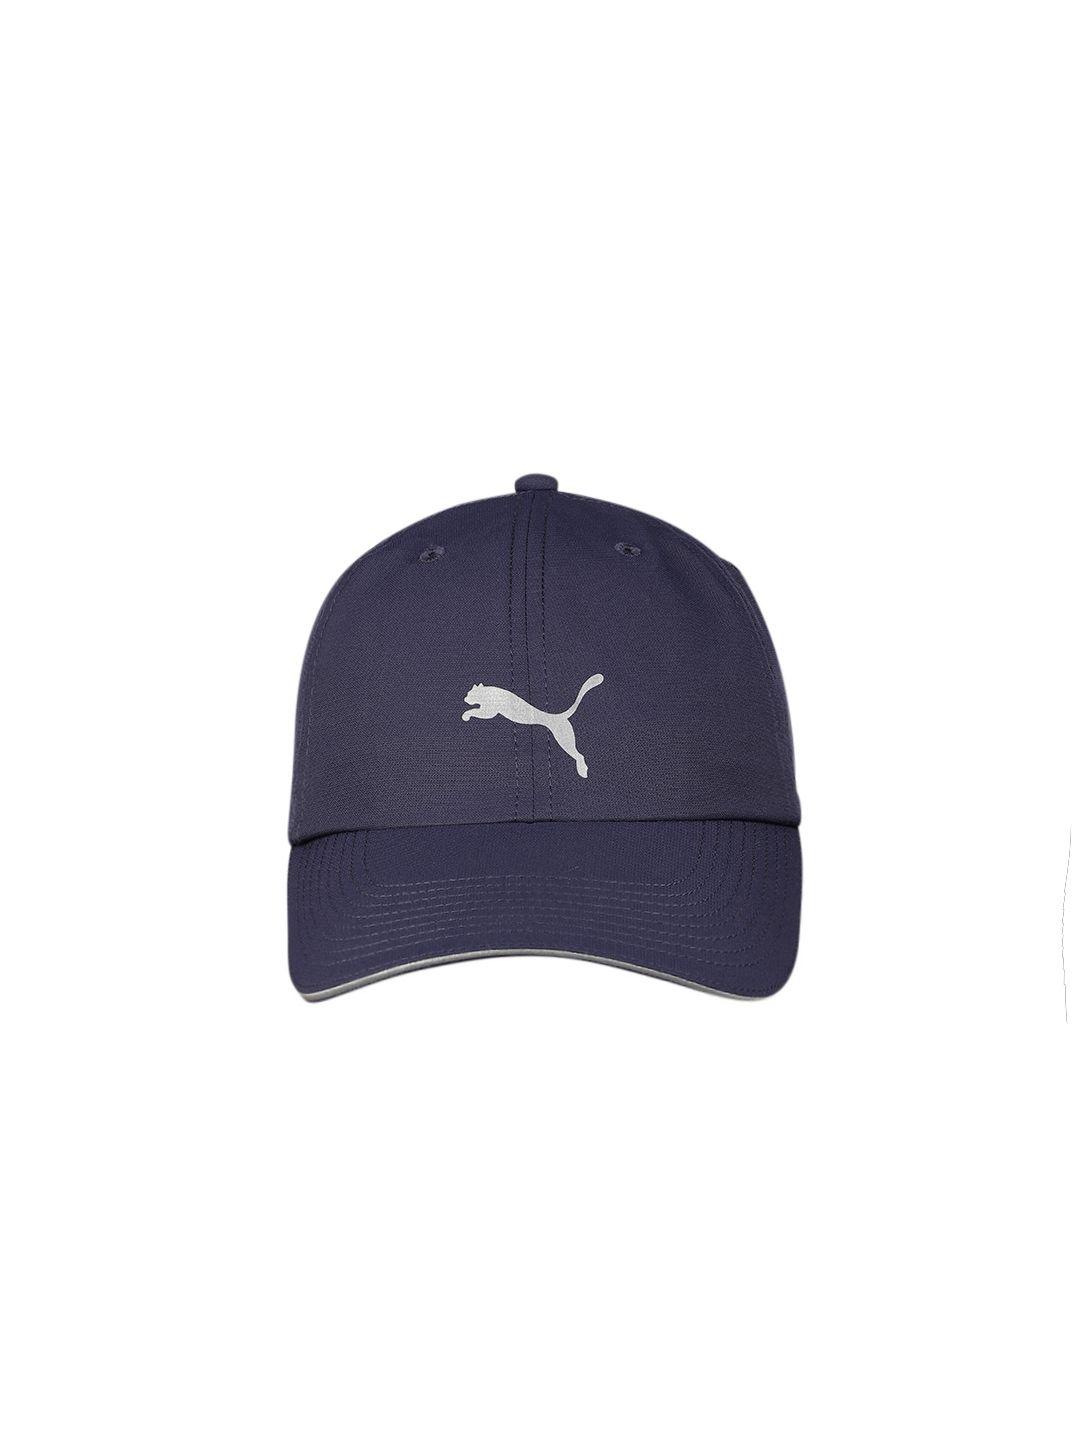 puma unisex navy blue brand logo printed running baseball cap